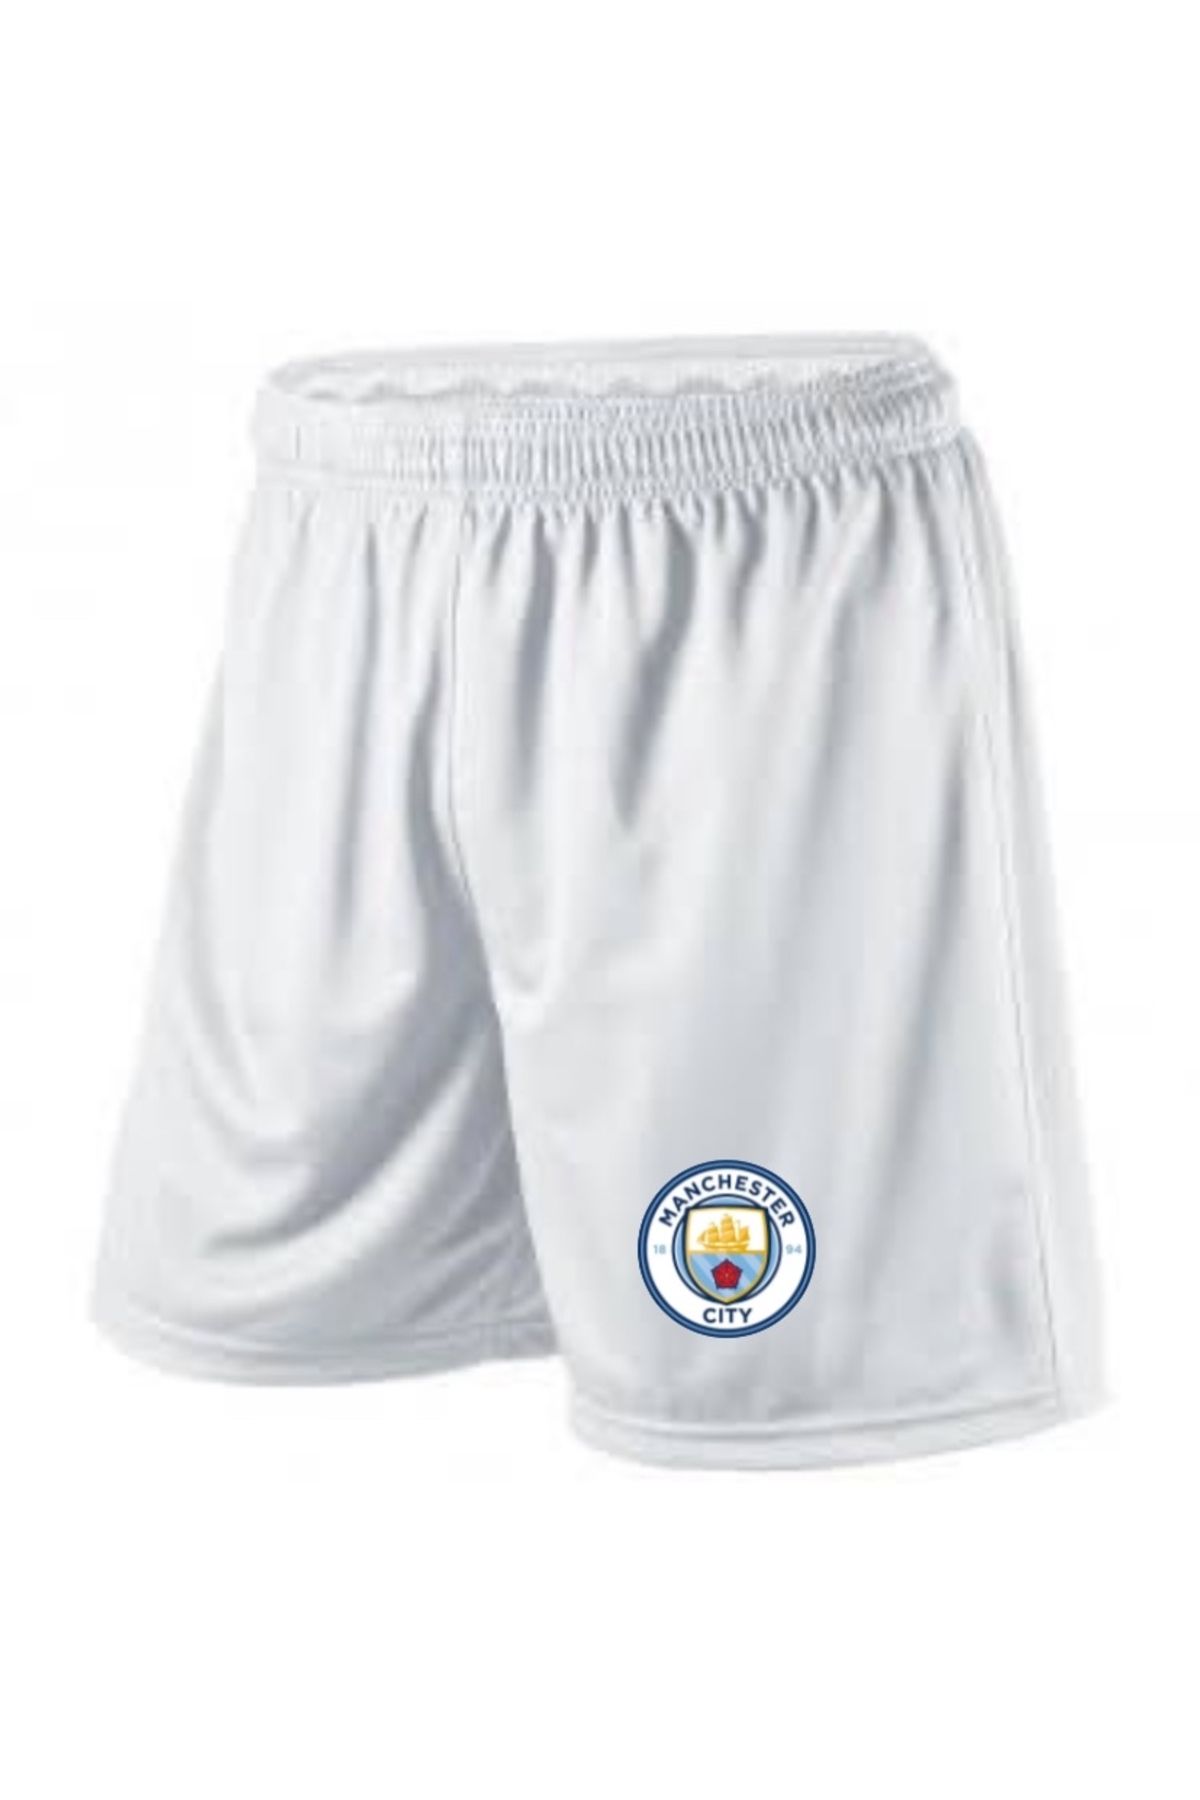 MufaLife Sport Manchester City Beyaz Futbol Şortu Halısaha Şortu